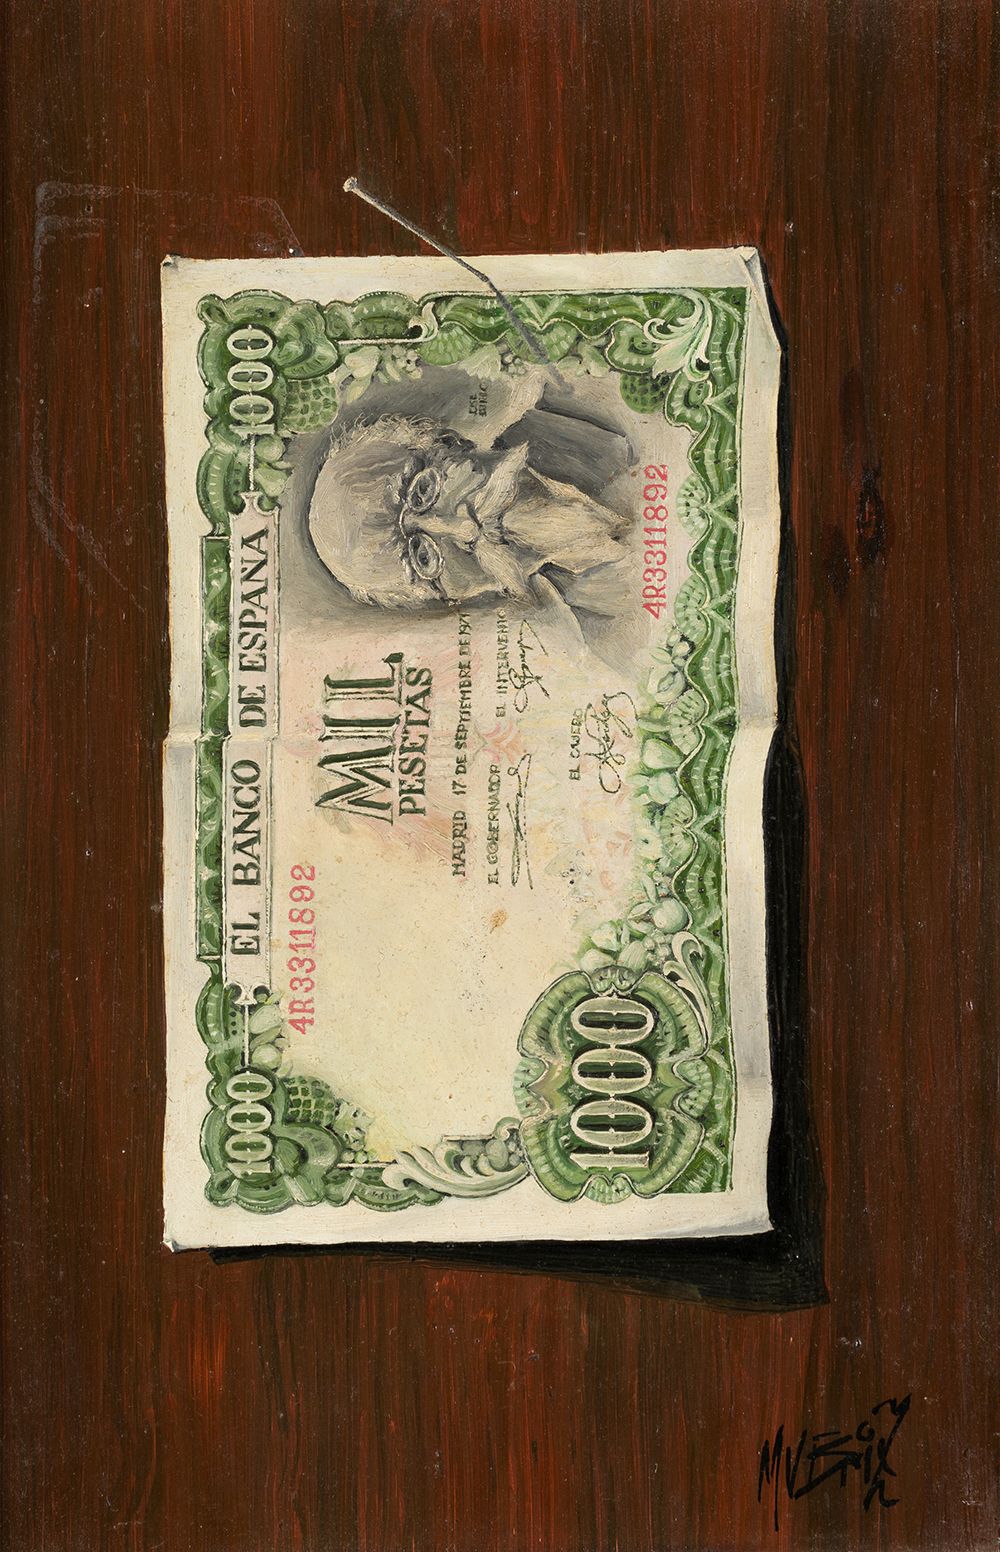 ANONYMOUS (20th century) "Thousand peseta banknote" 右下角有难以辨认的签名，26 x 18 厘米。桌子上的油